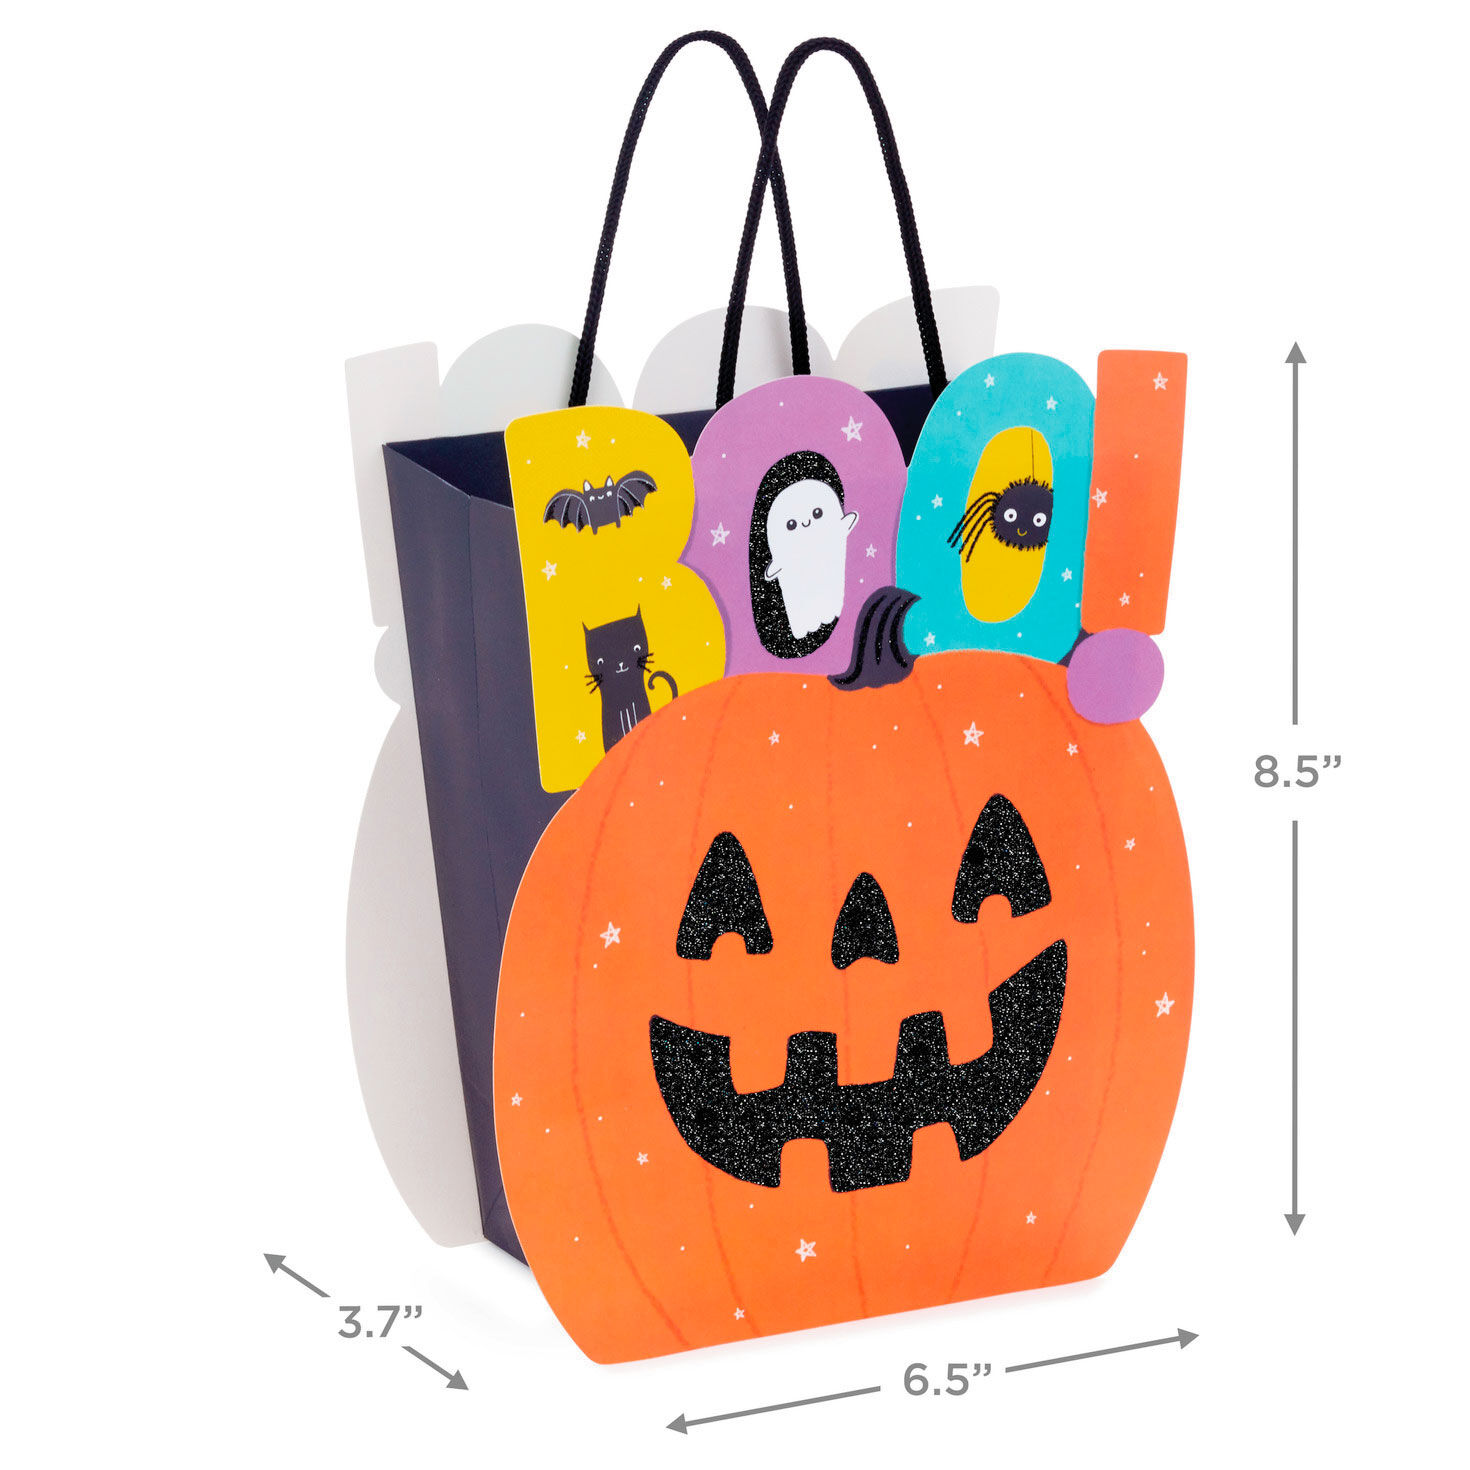 Hallmark Large Self-Sealing Gift Bags with Handles Teens for Kids 4 Bags, 2 Designs: Good Vibes Headphones, Bday Vibes Roller Skates Birthdays 